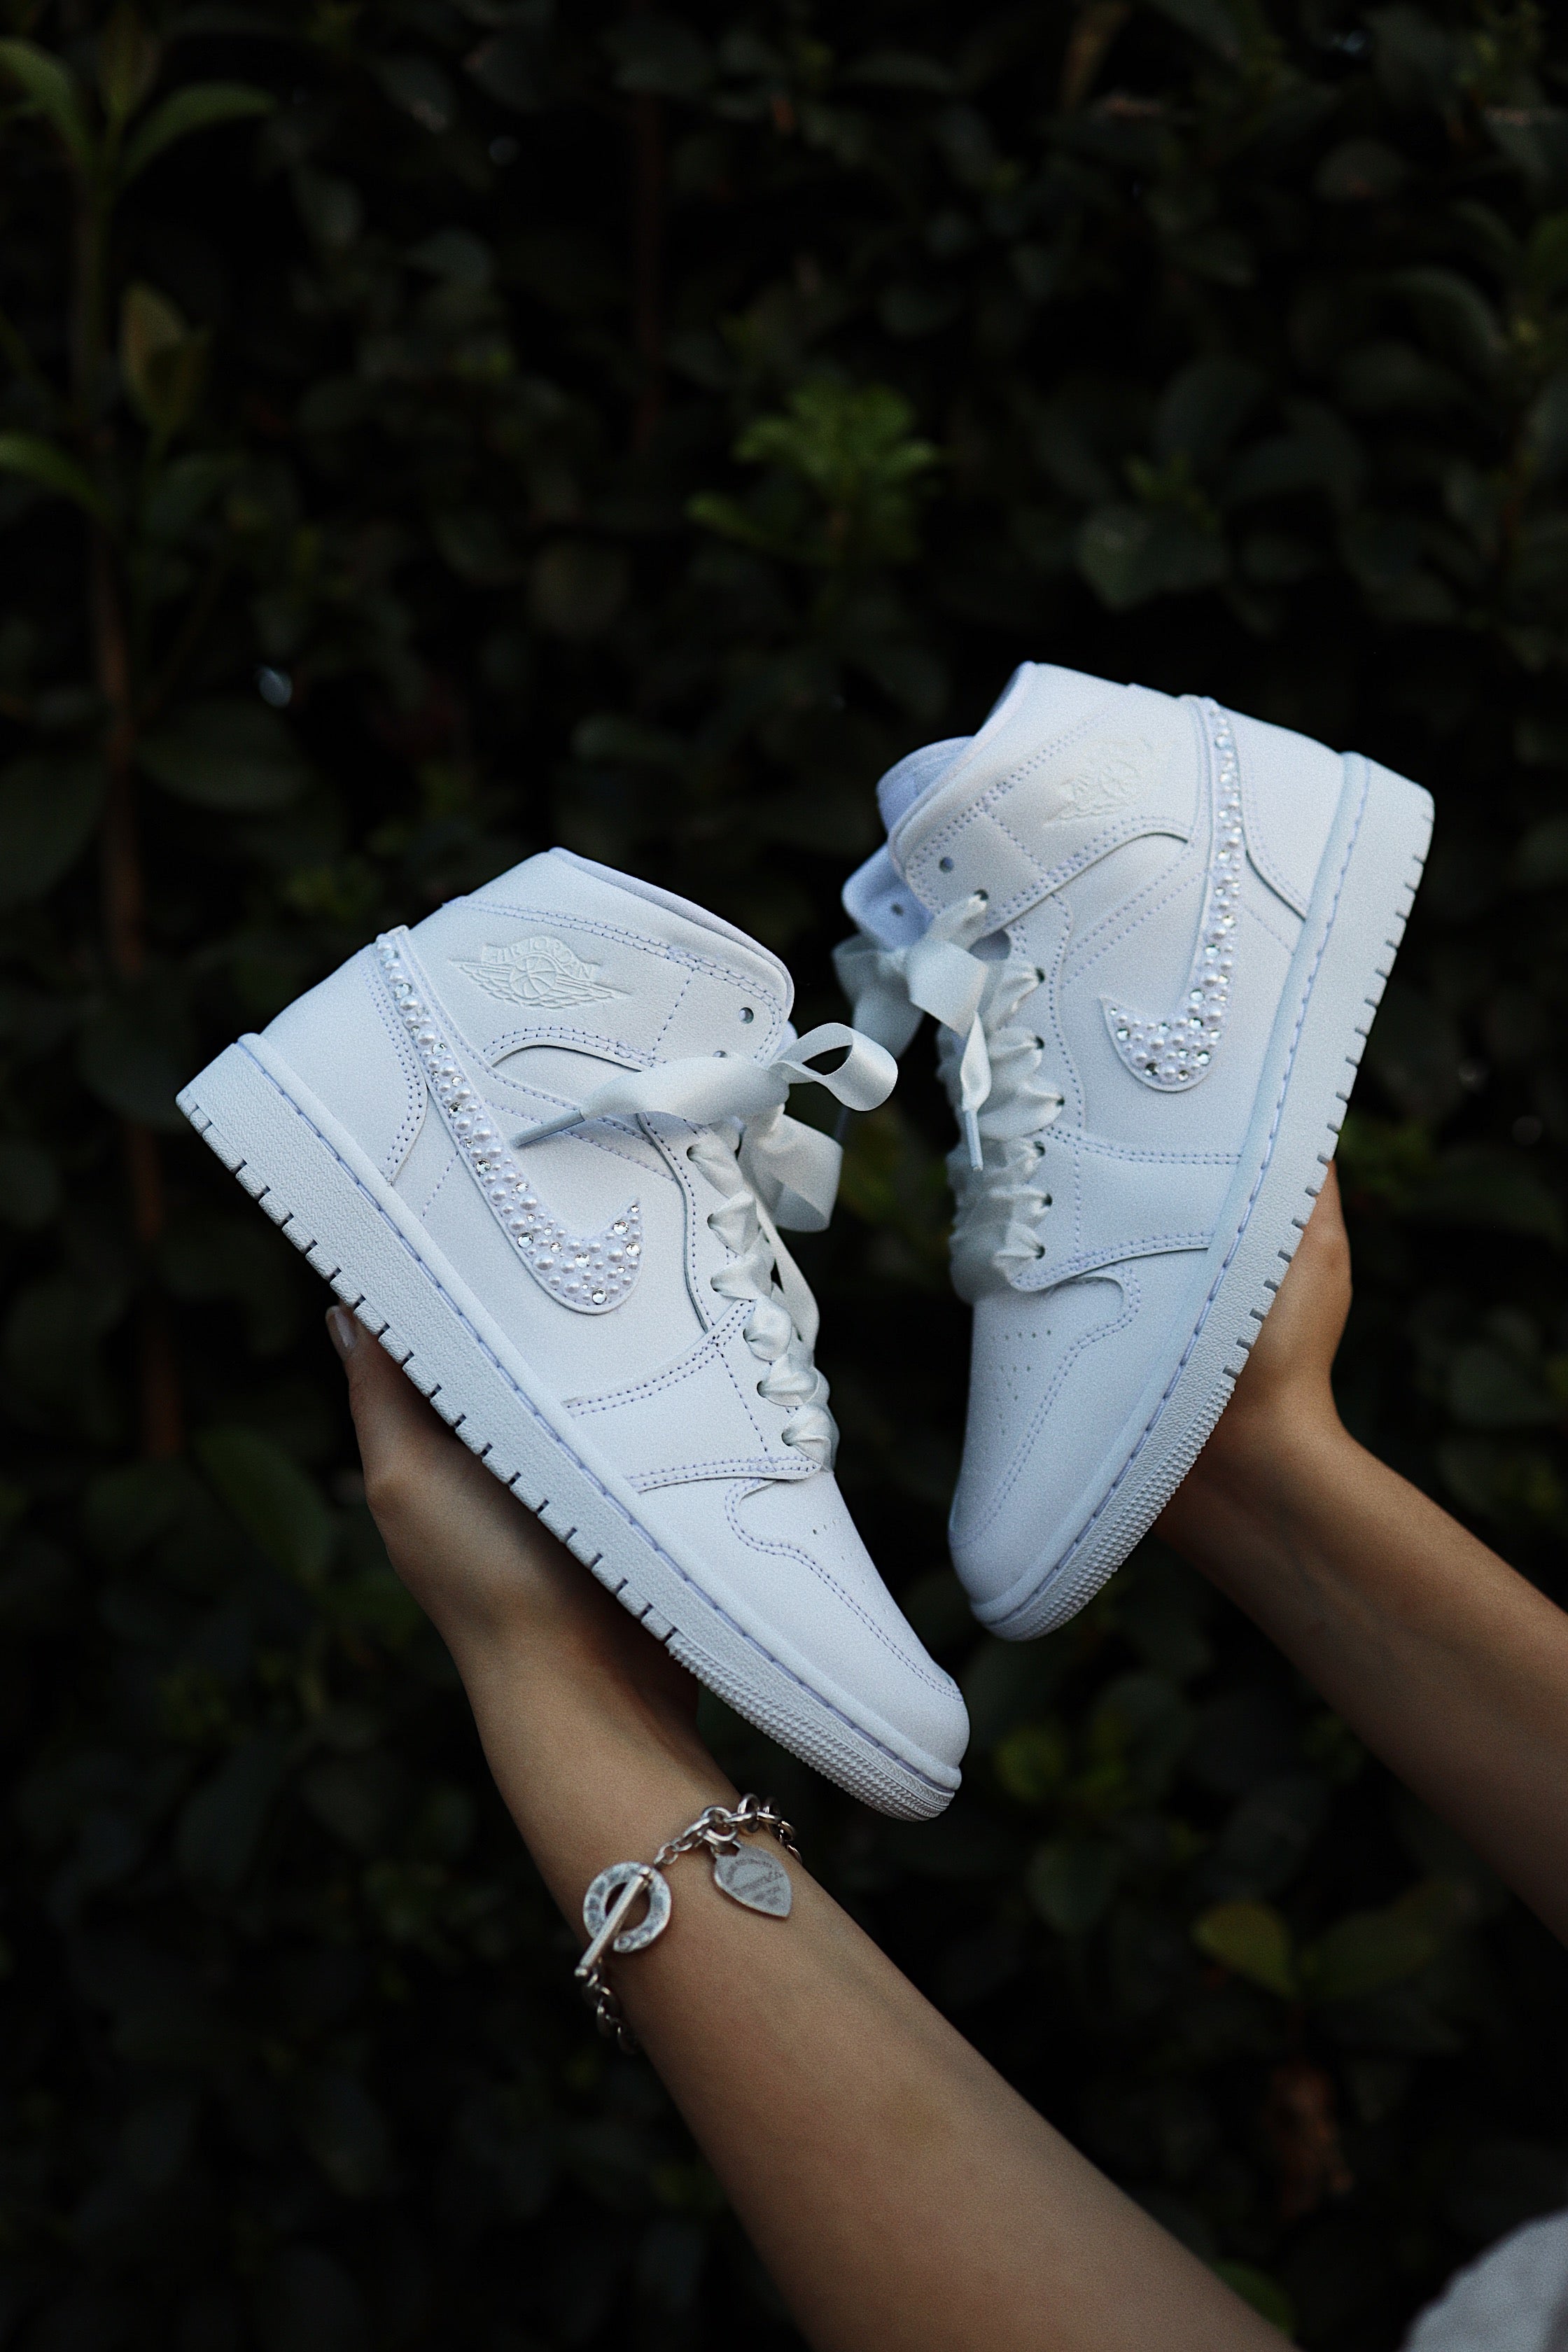 Custom Wedding Shoes | Air Jordan 1 Sneakers | solecraftstudio